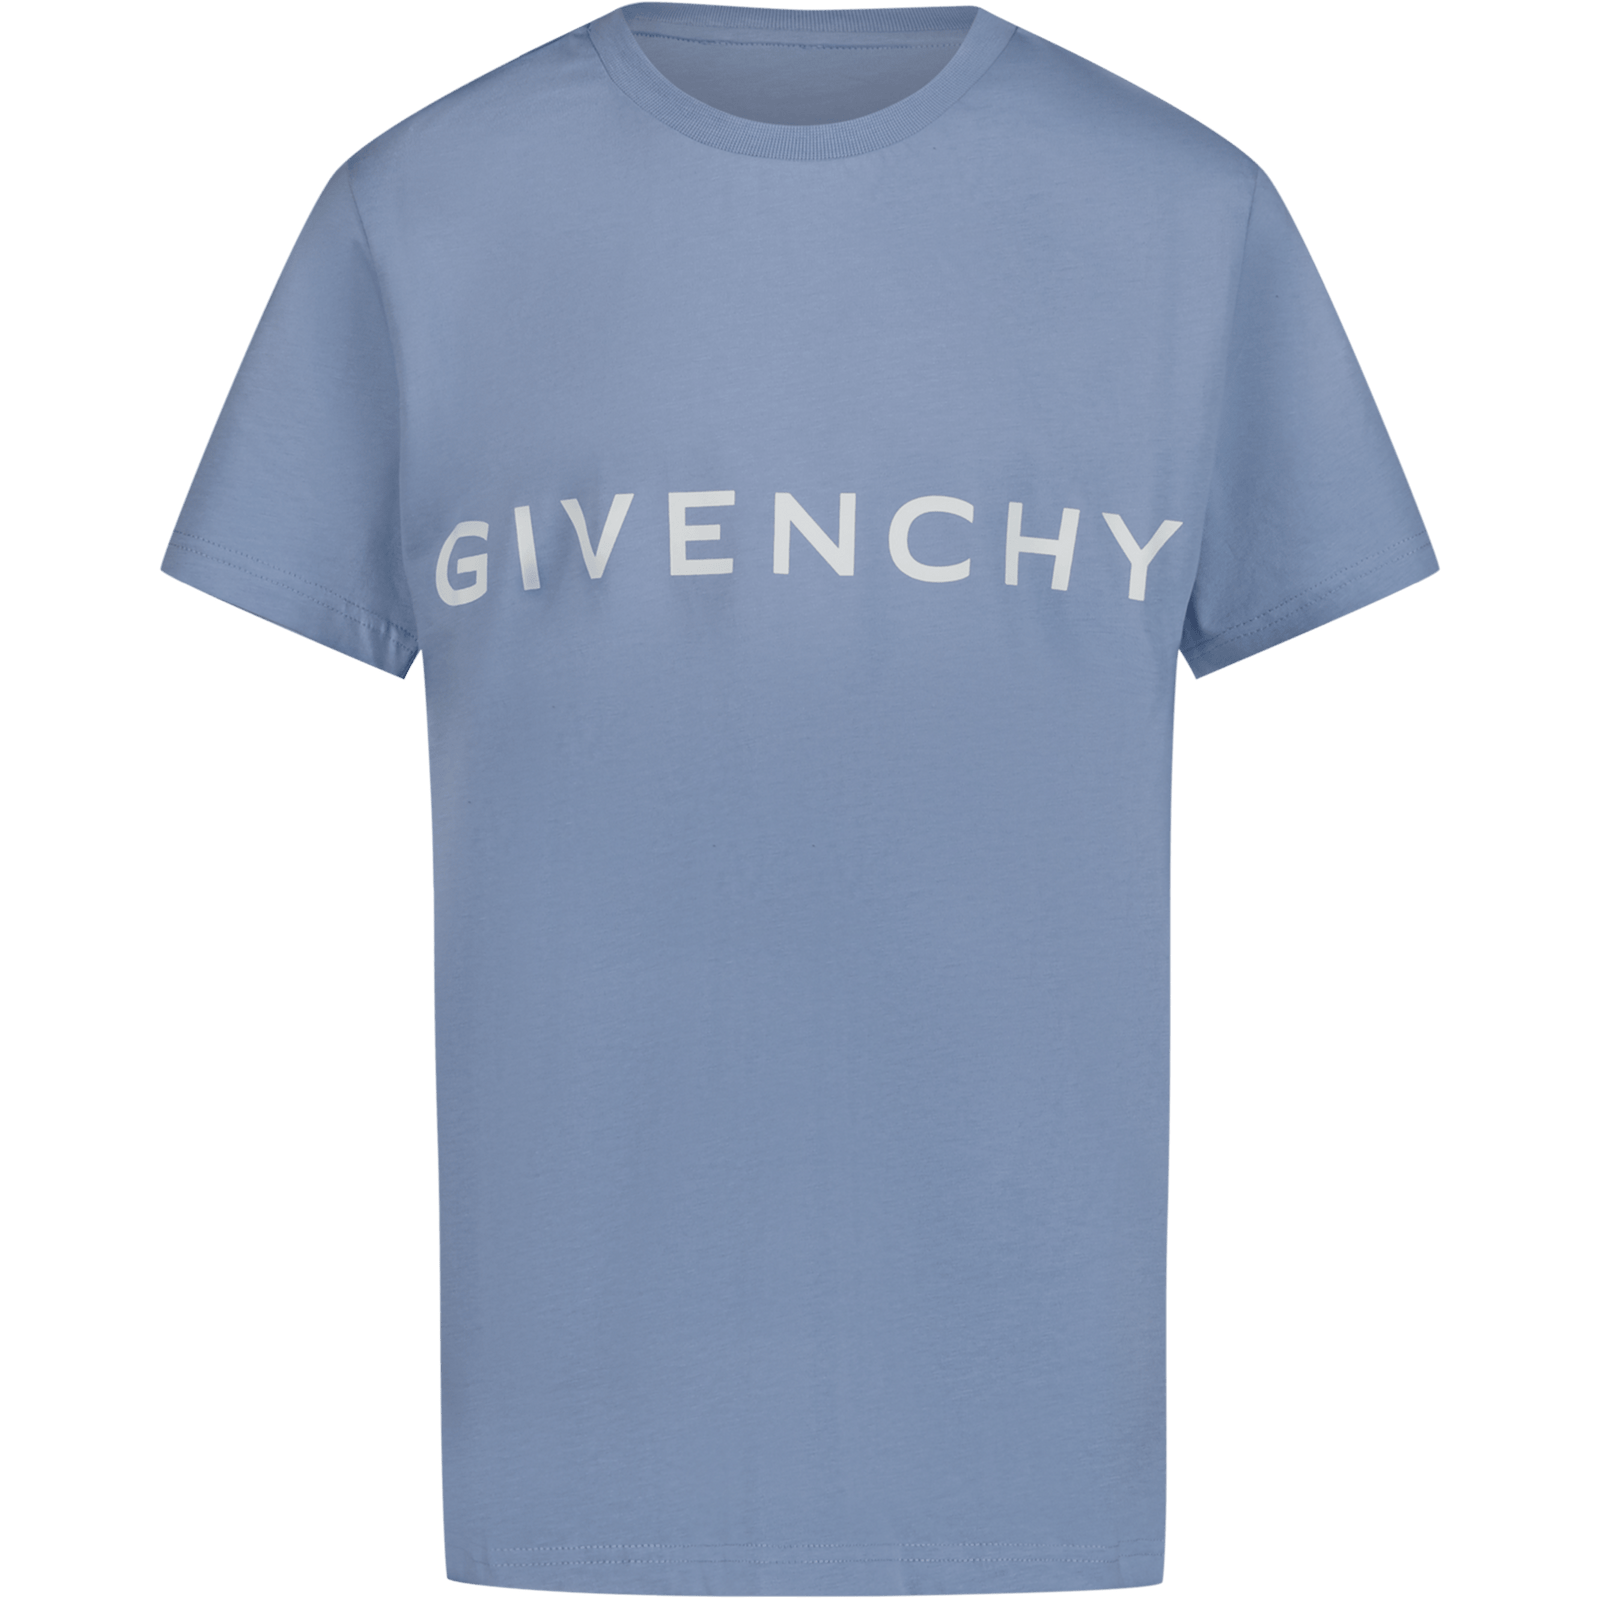 Givenchy Kinder Jongens T-Shirt Licht Blauw 4Y